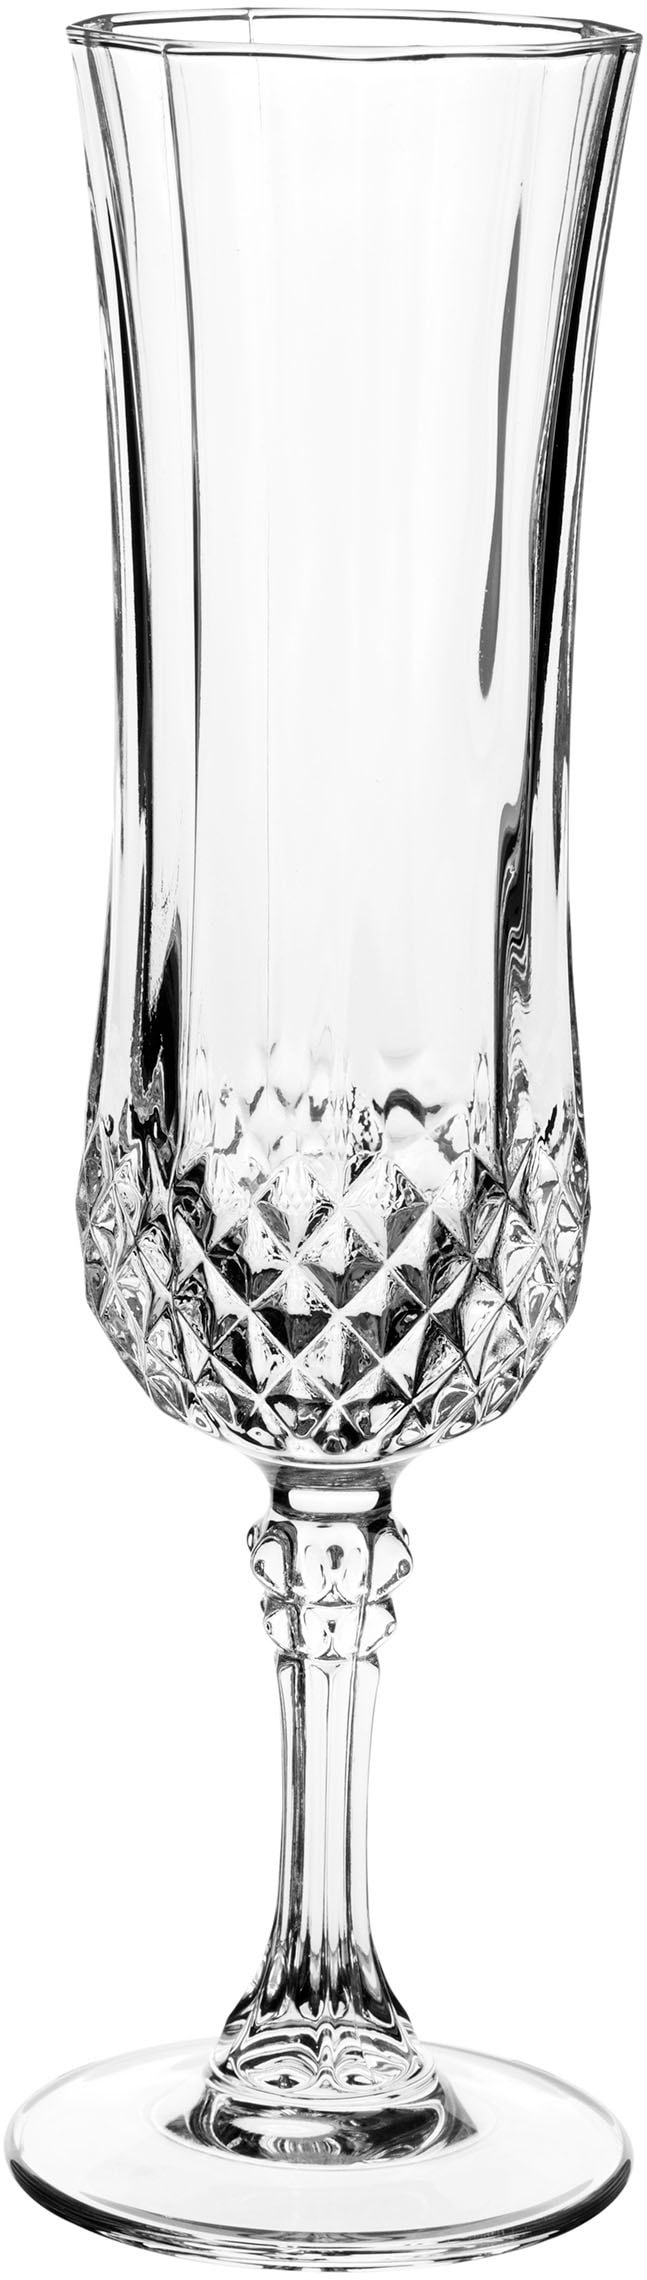 Sektglas »Longchamp«, (Set, 6 tlg., 6 Sektgläser), 6-teilig, 140 ml, Made in France